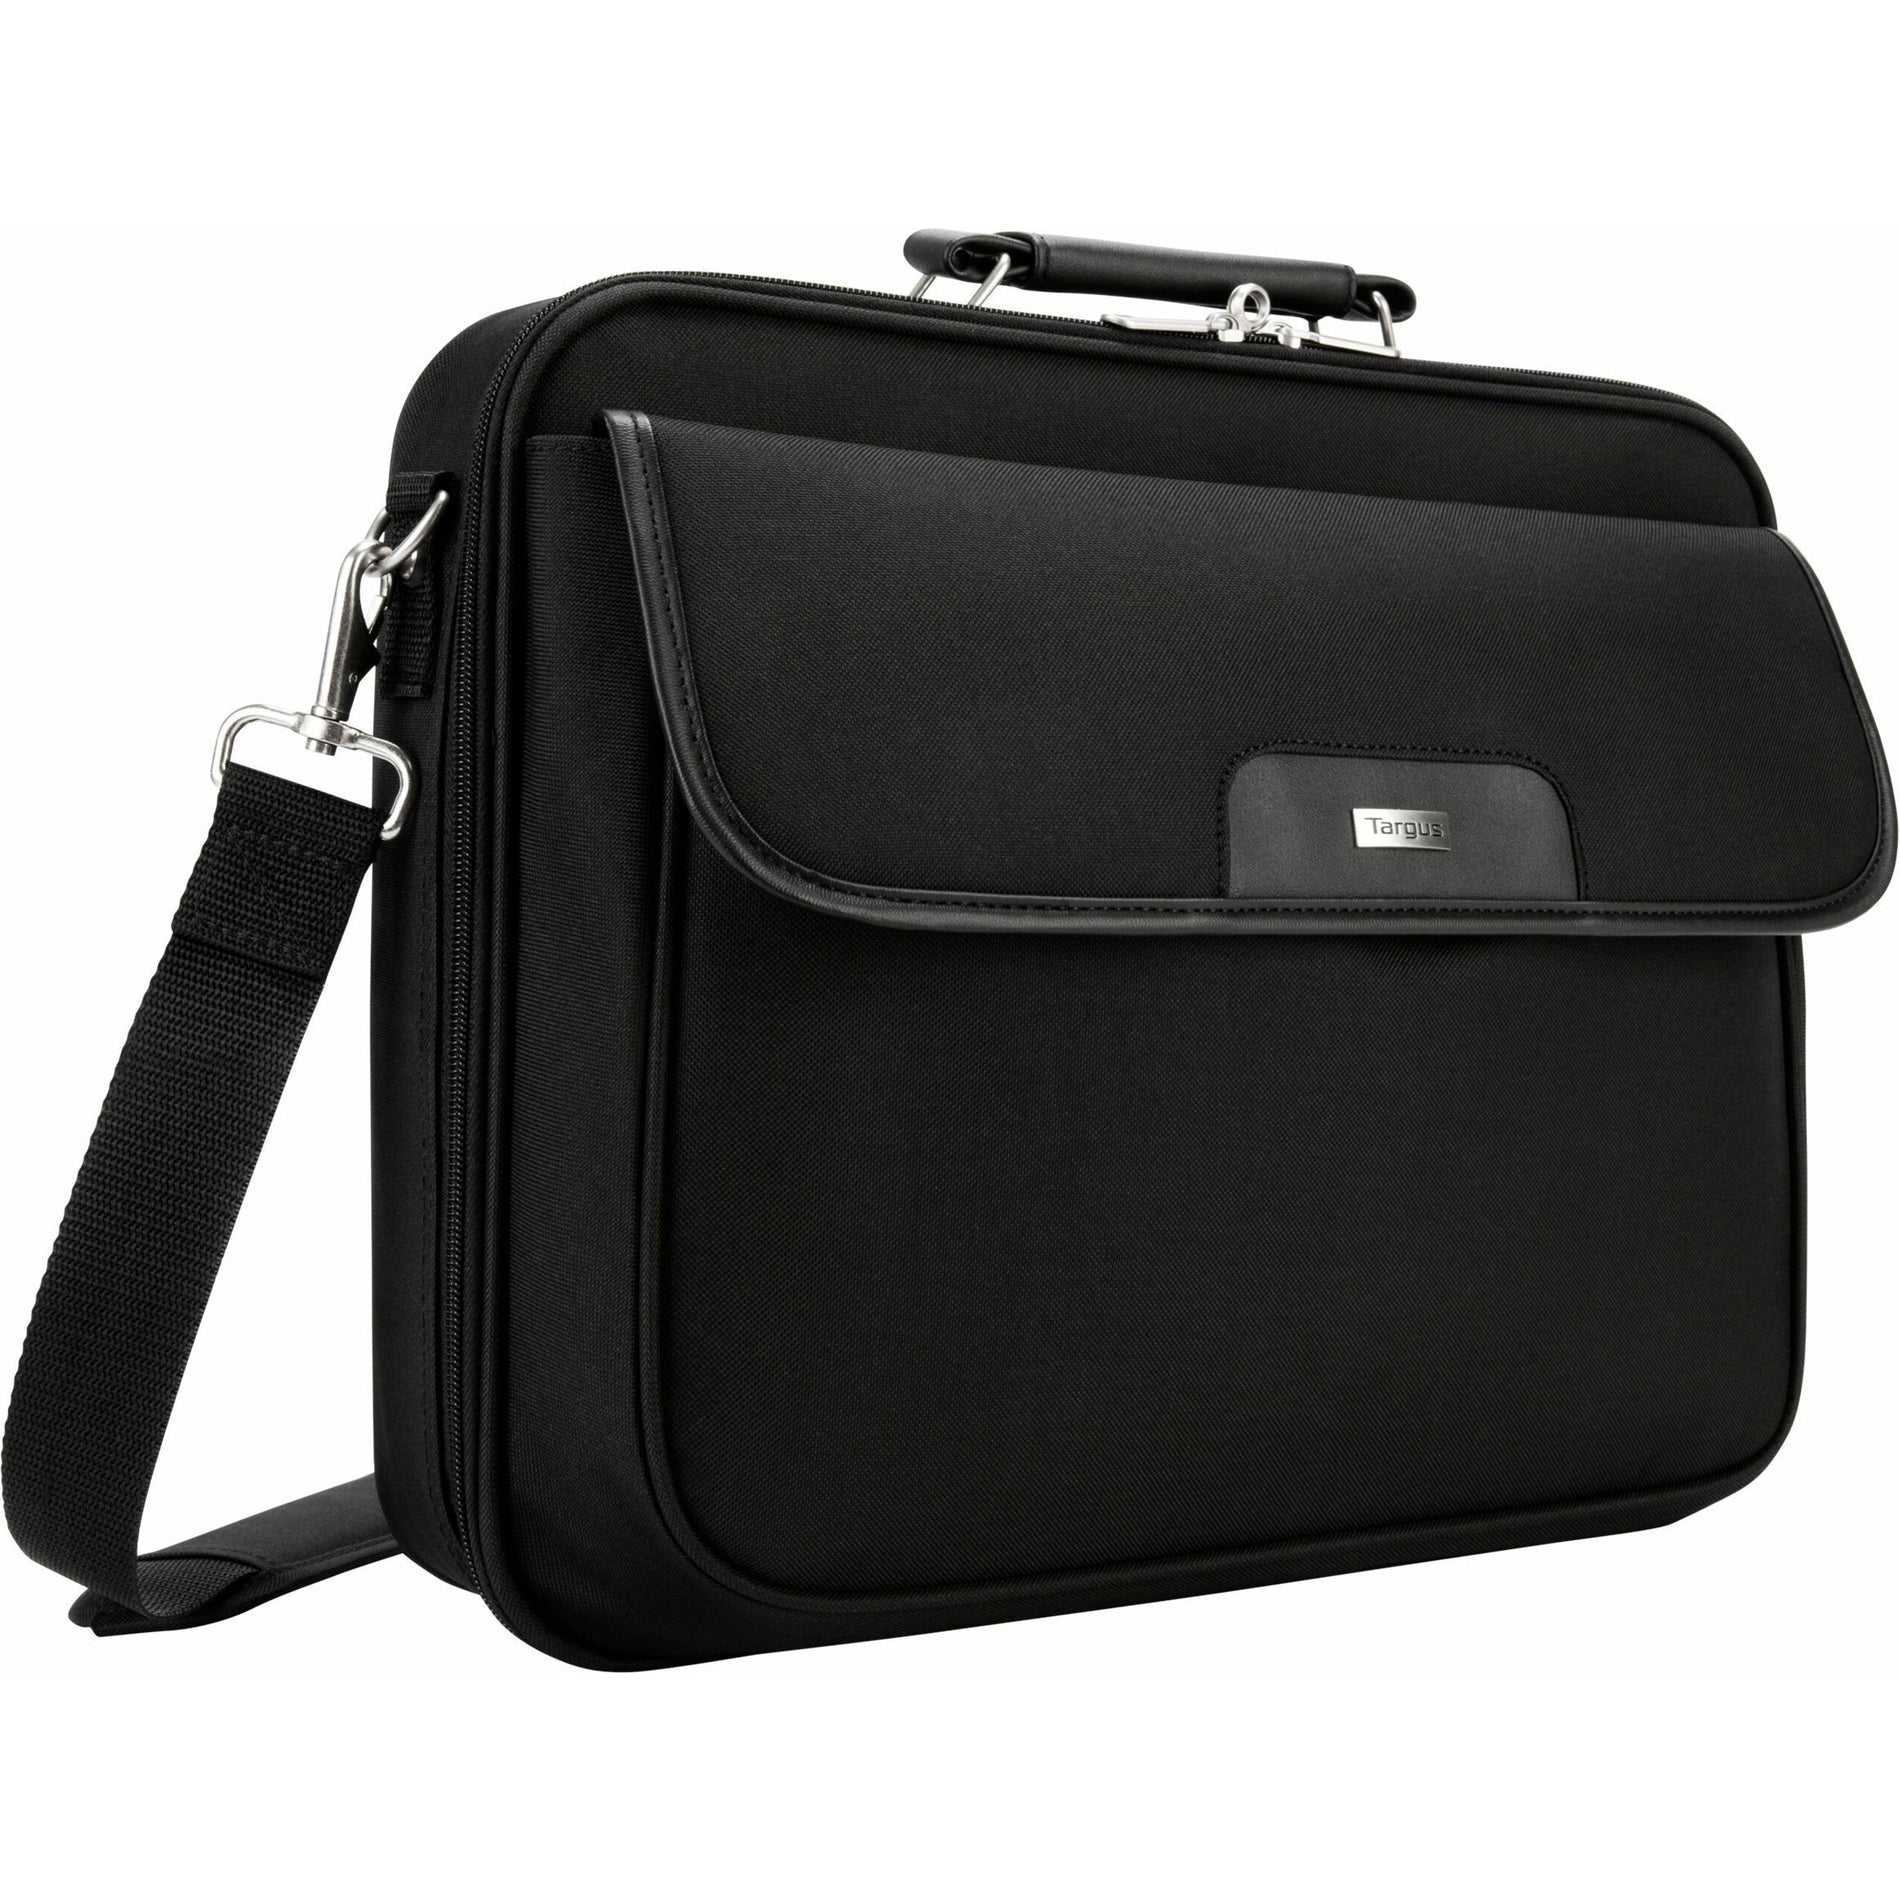 Targus OCN1 Notepac Carrying Case, Detachable Shoulder Strap, Black